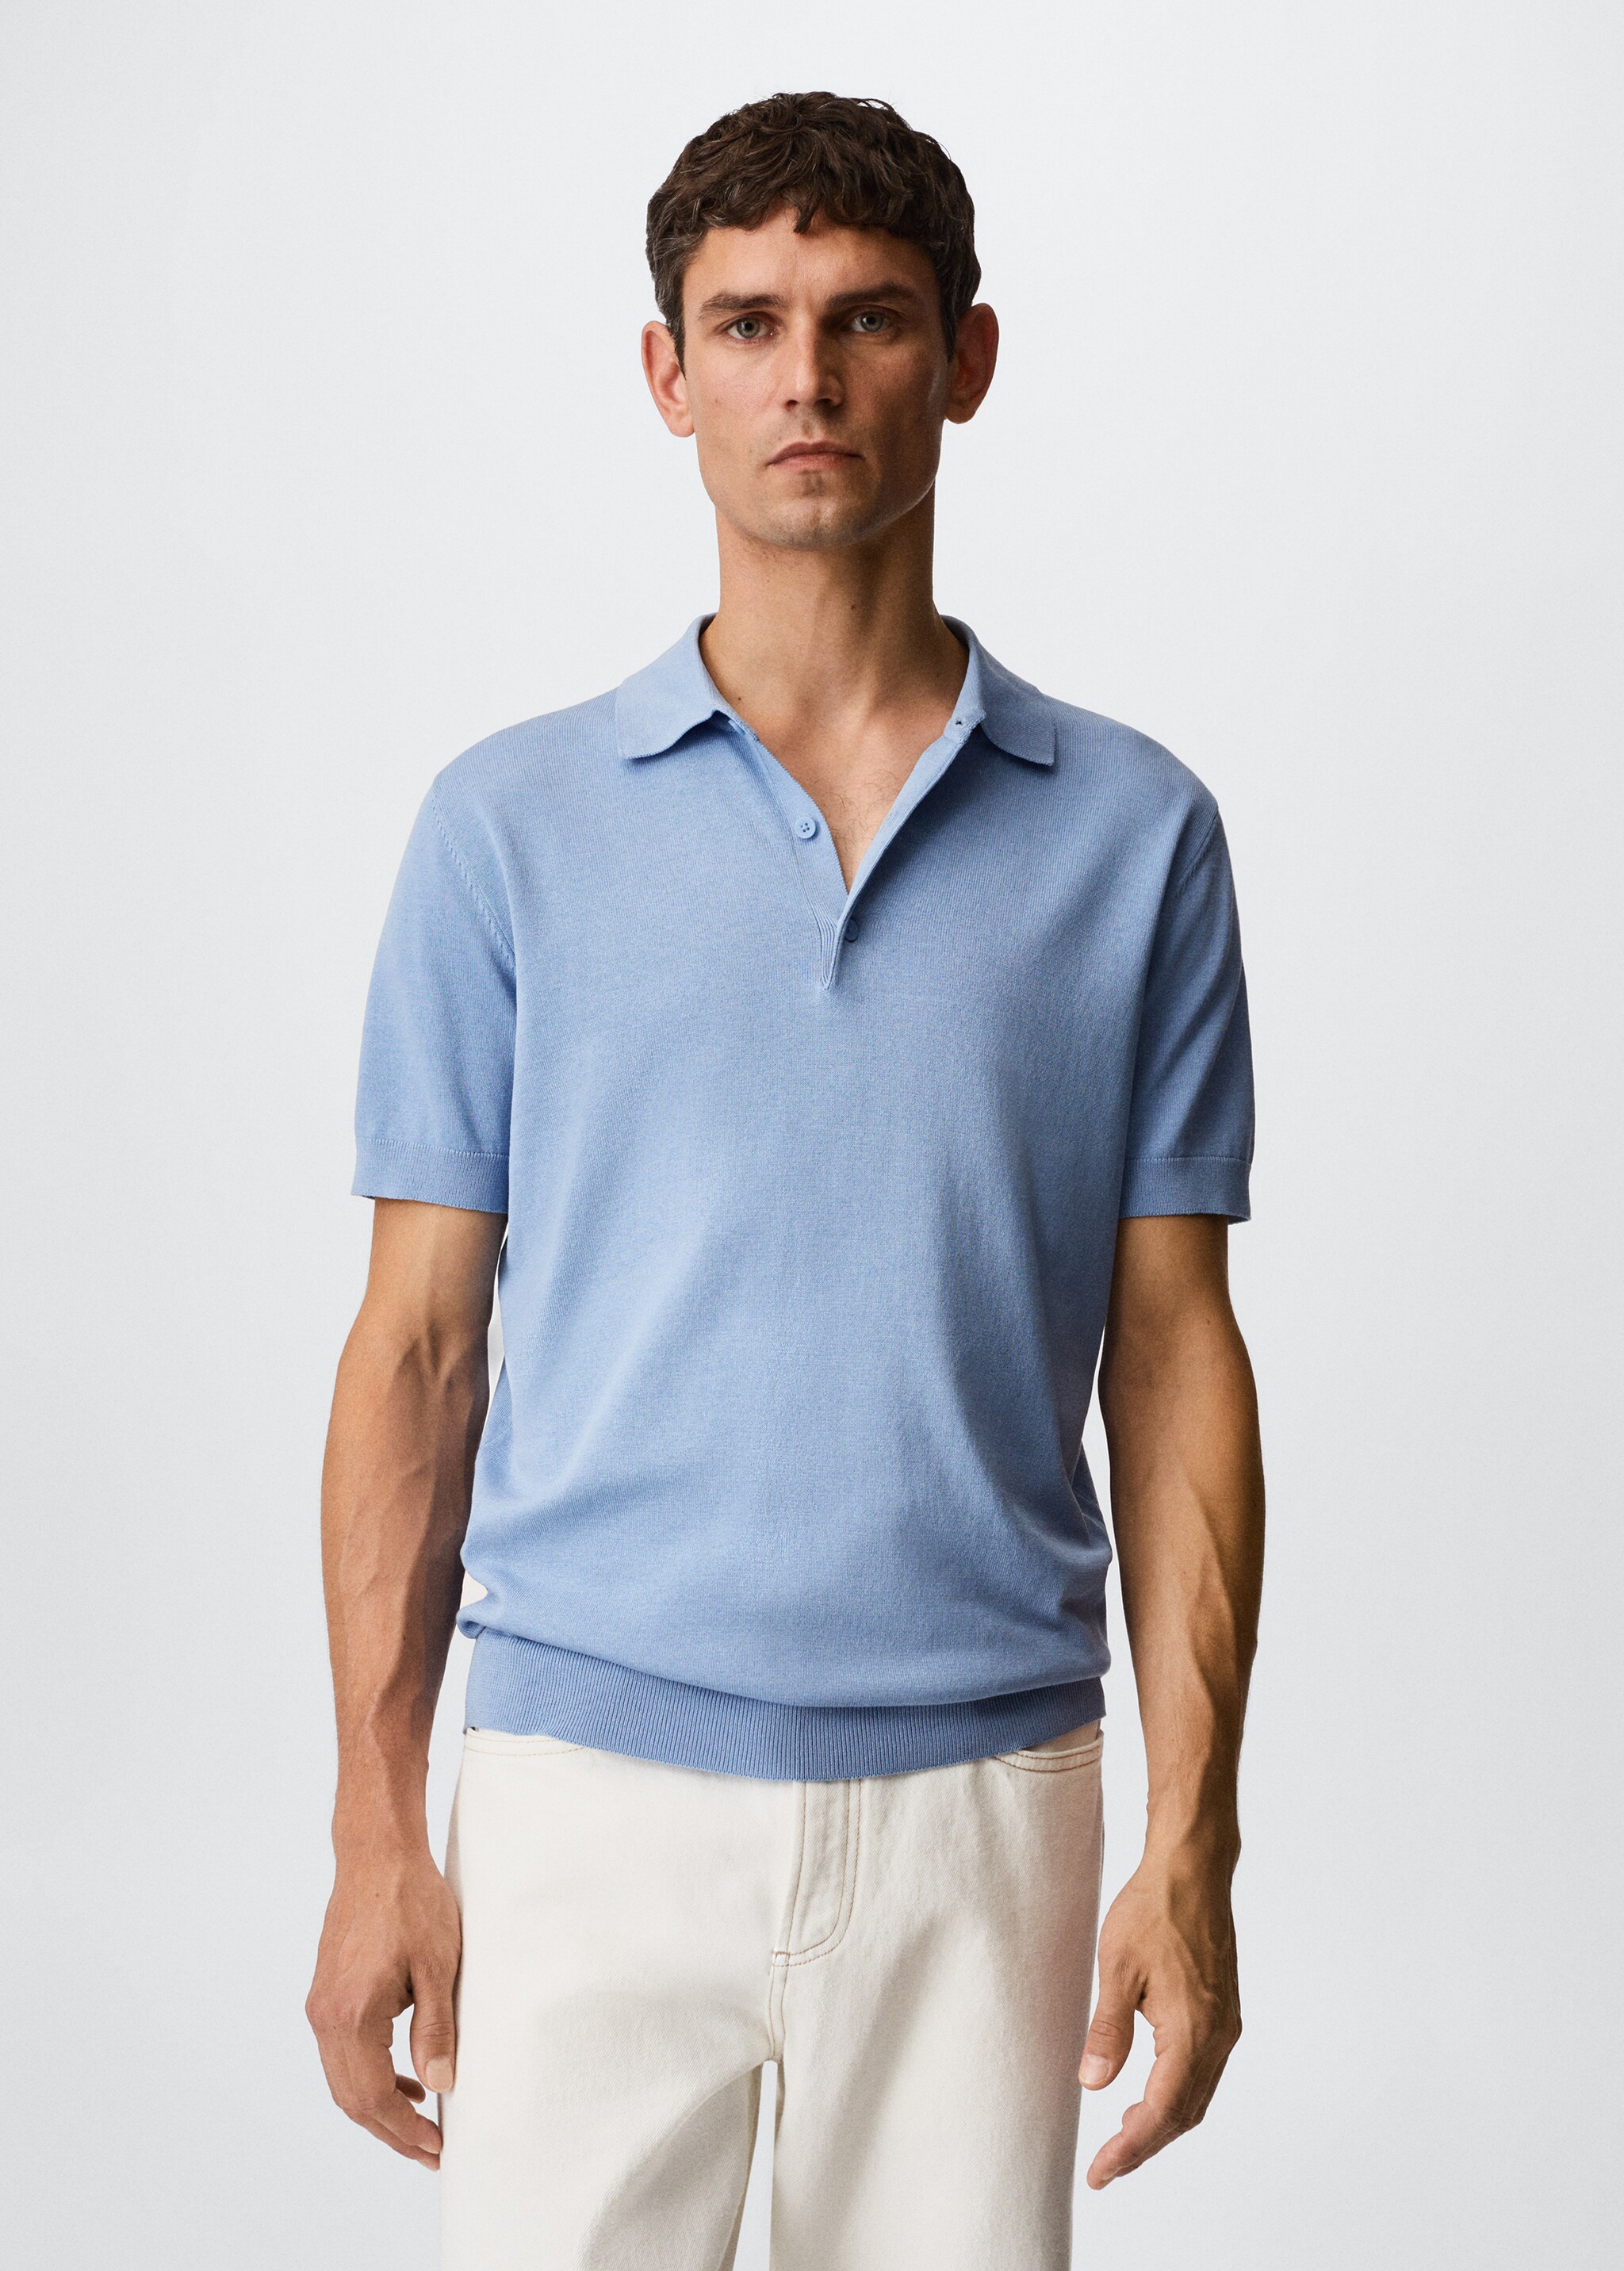 Knit cotton polo shirt - Medium plane